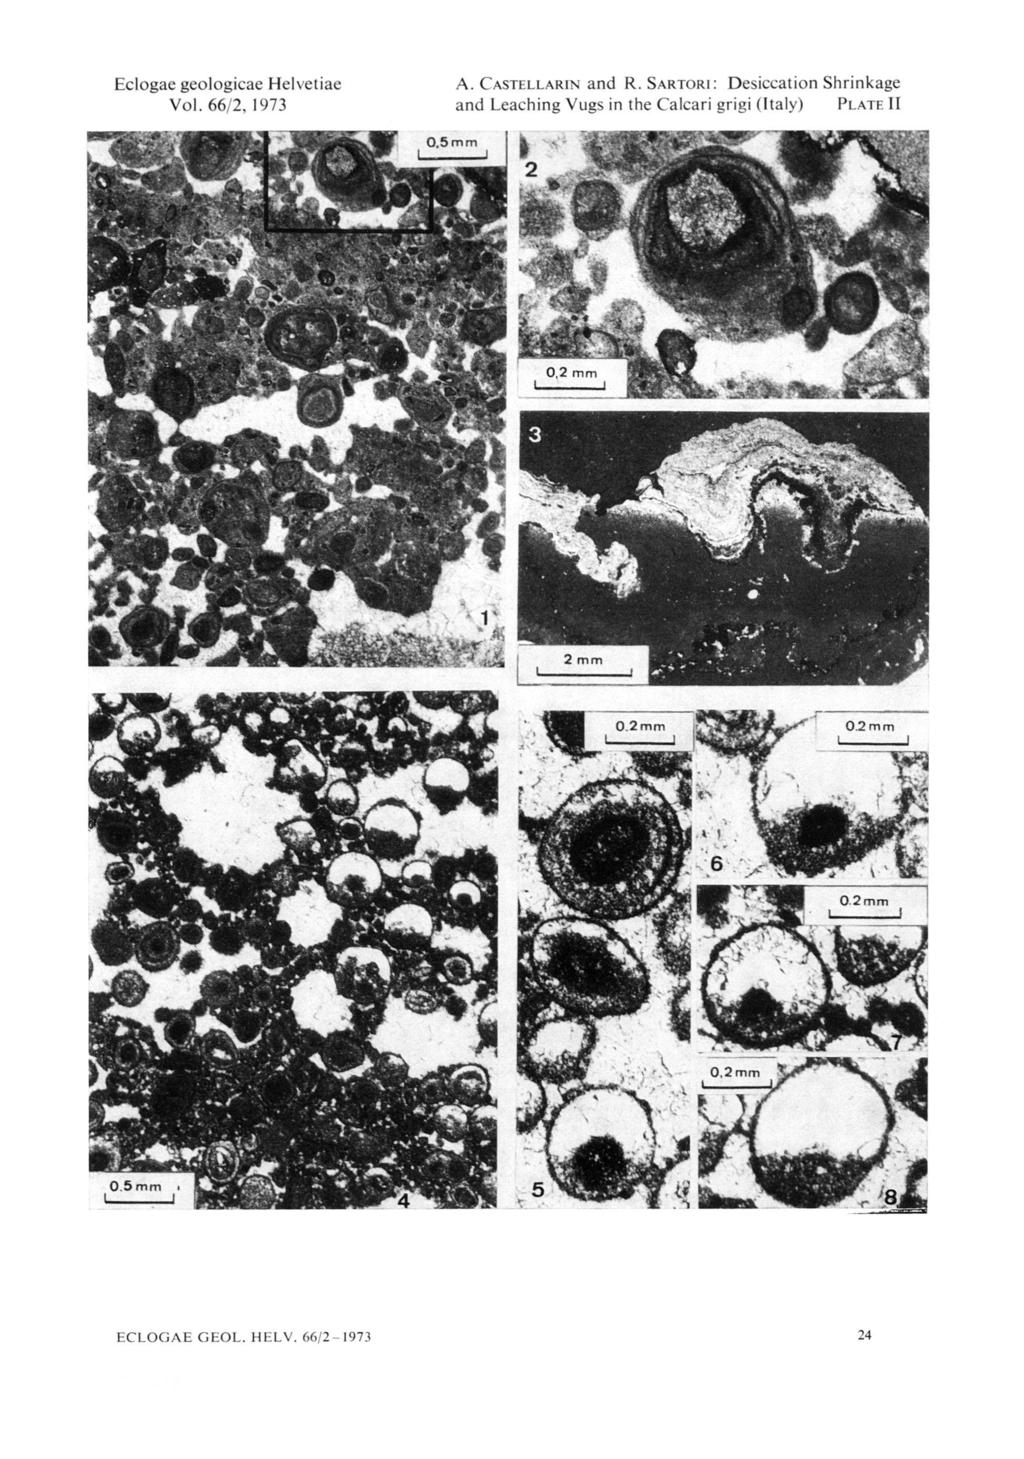 ' Eclogae geologicae Helvetiae Vol. 66/2, 1973 A. Castellarin and R. Sartori: Desiccation Shrinkage and Leaching Vugs in the Calcari grigi (taly) Plate X> ;x.